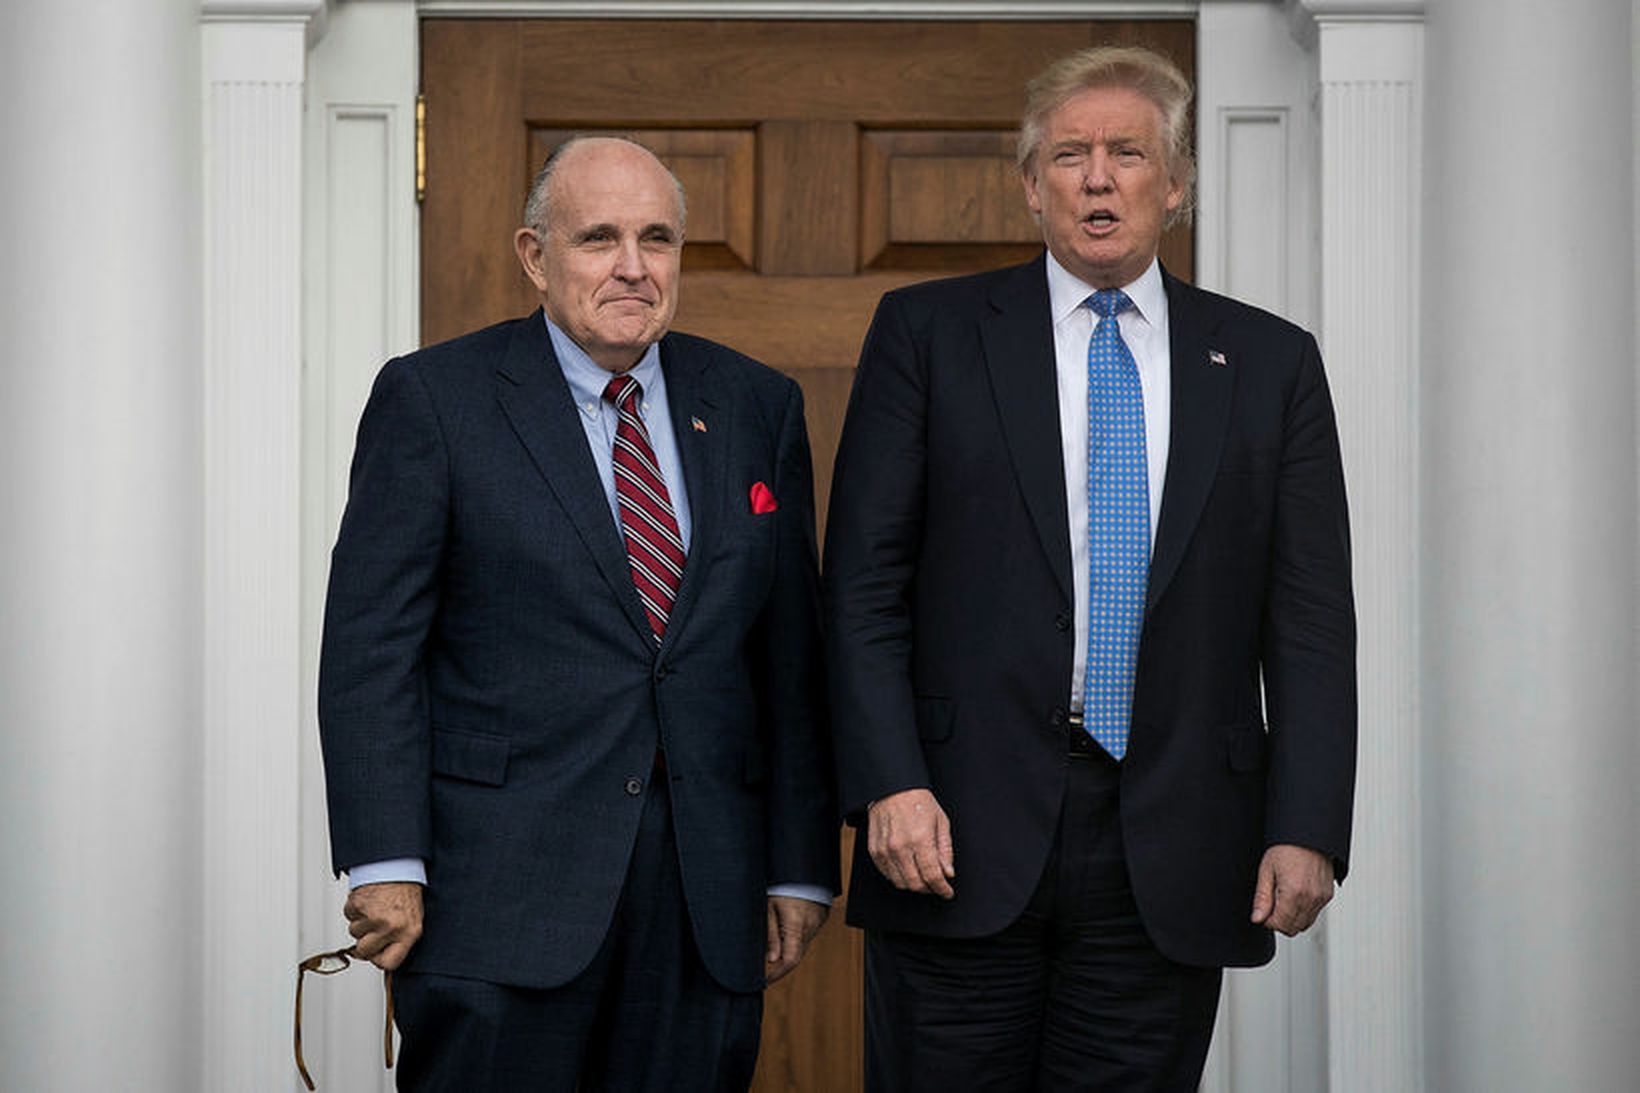 Rudy Giuliani ásamt Donald Trump árið 2016.